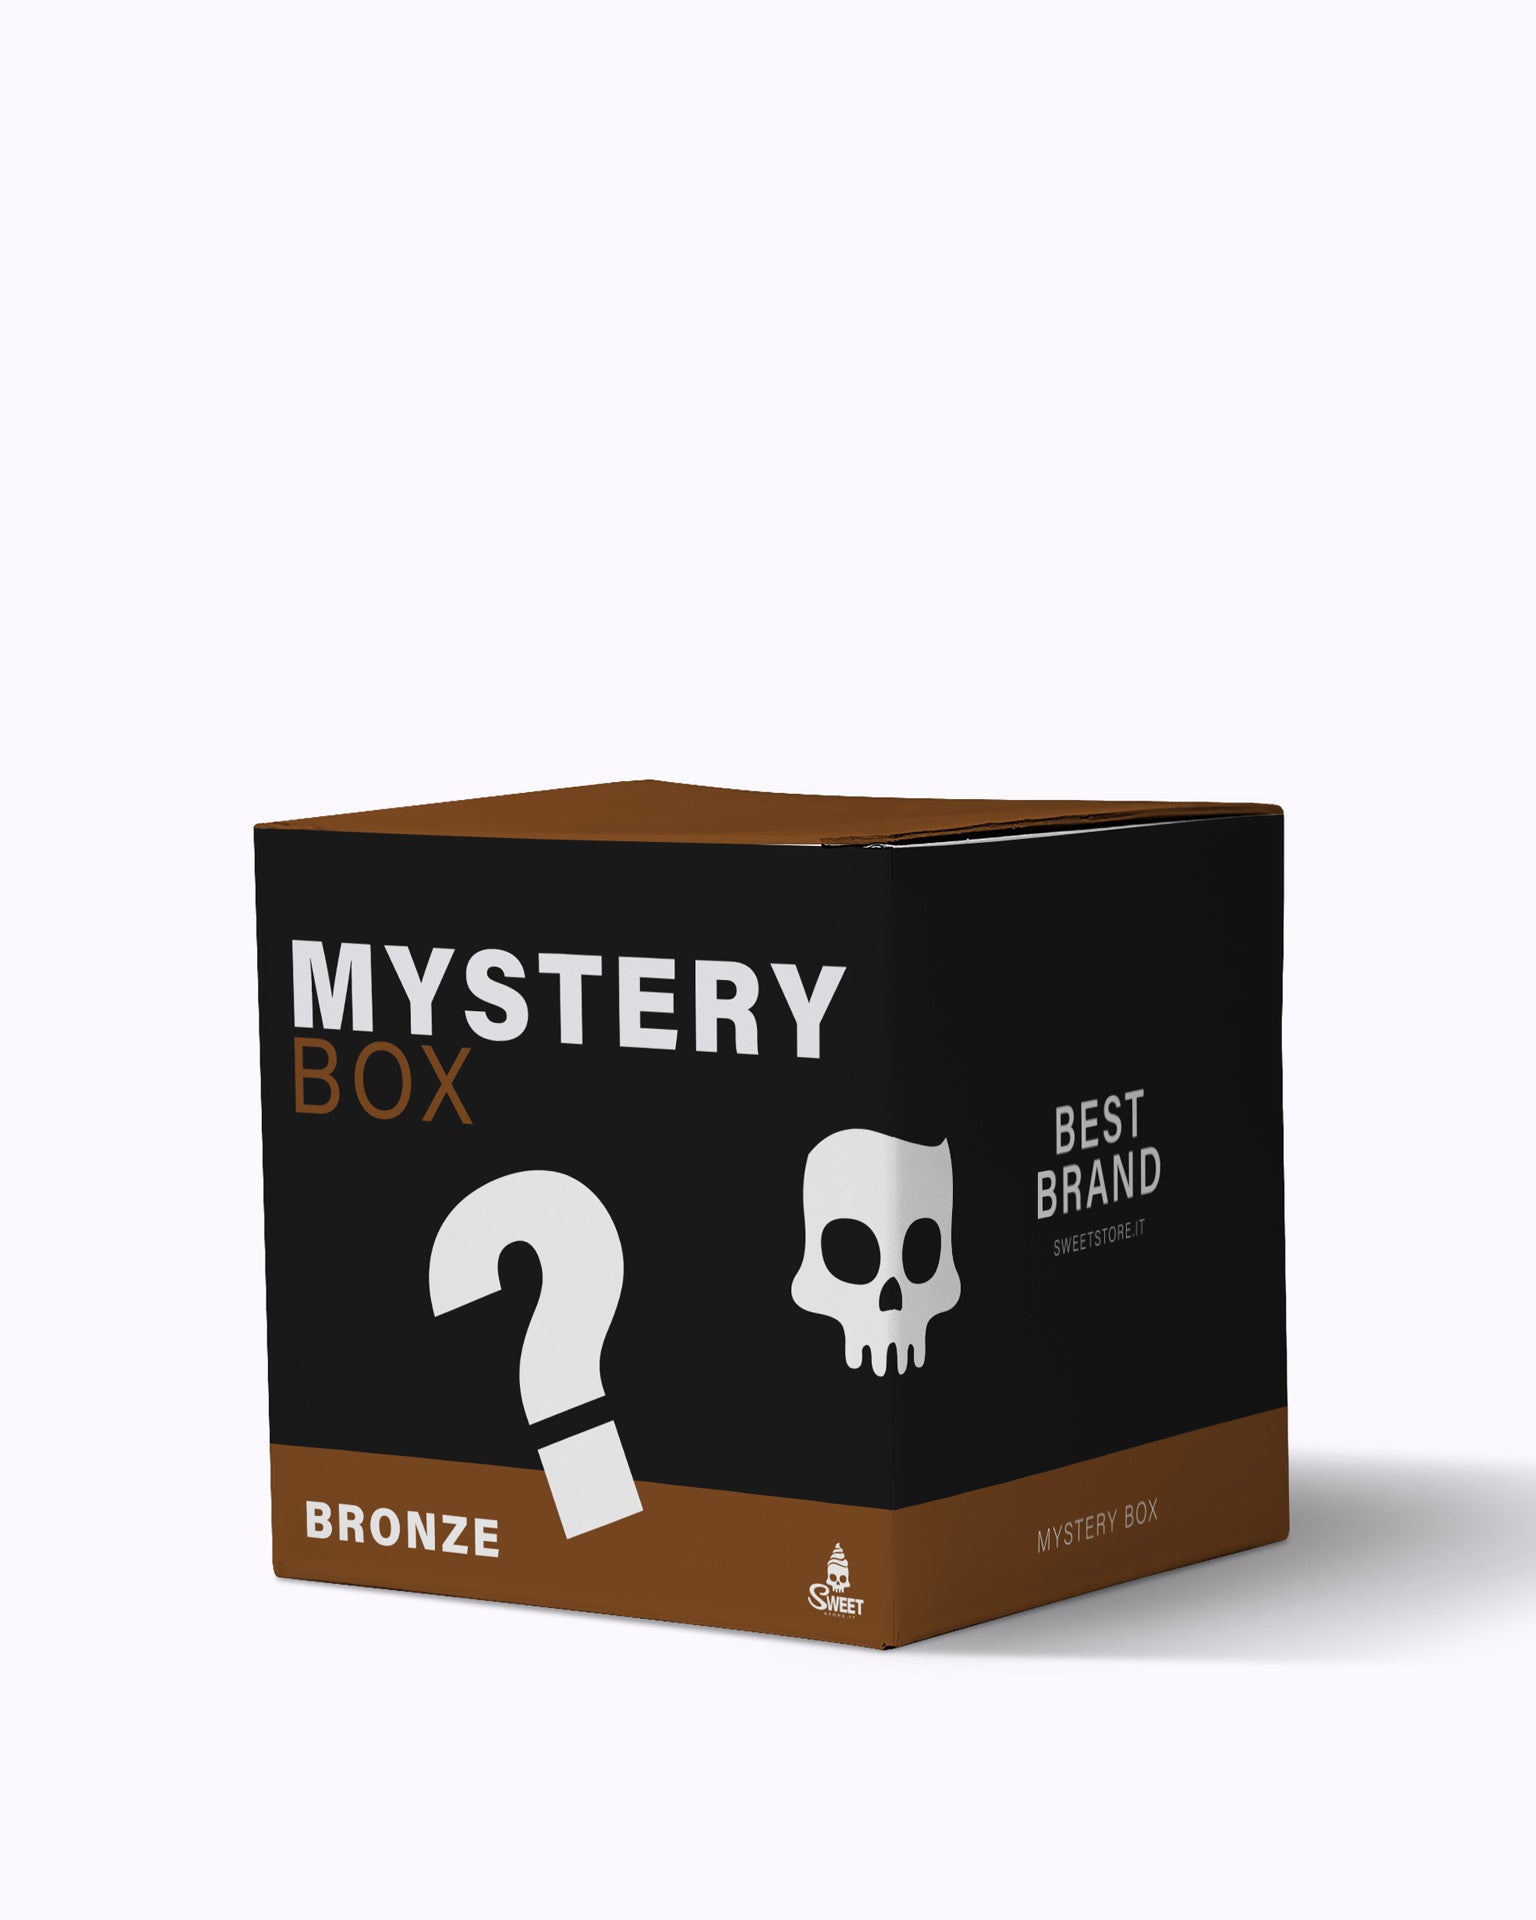 BRONZE MYSTERY BOX